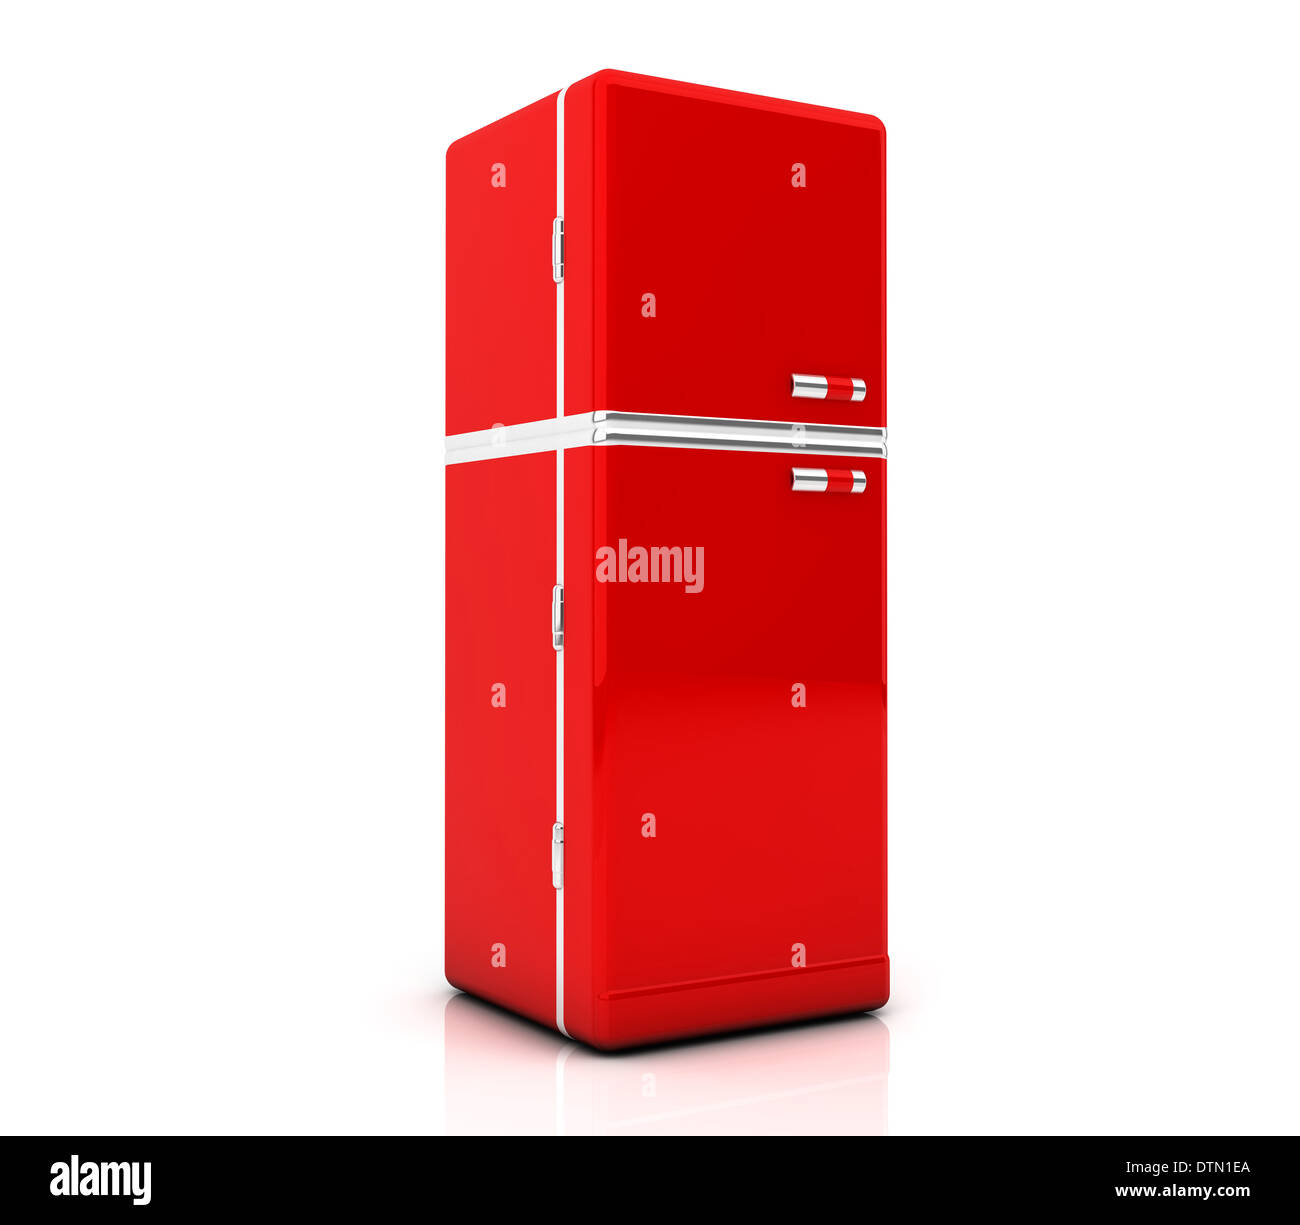 Retro red fridge refrigerator isolated hi-res stock photography